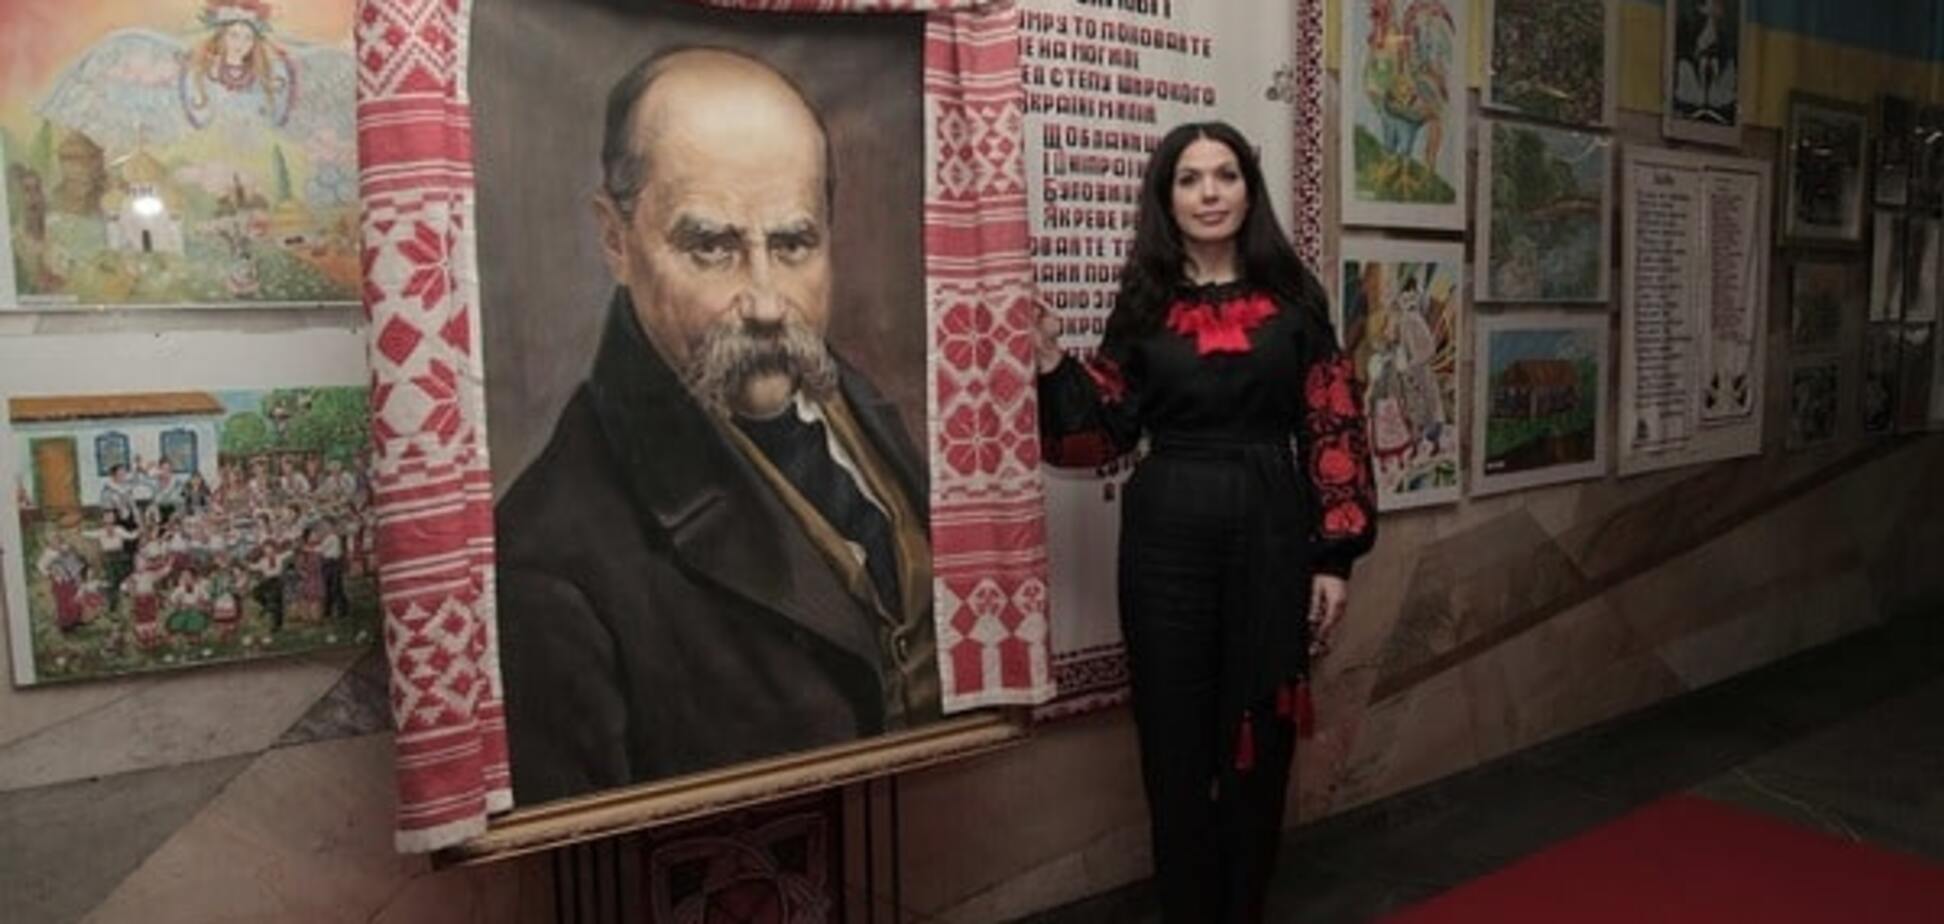 Литовченко представила выставку по мотивам произведений Шевченко